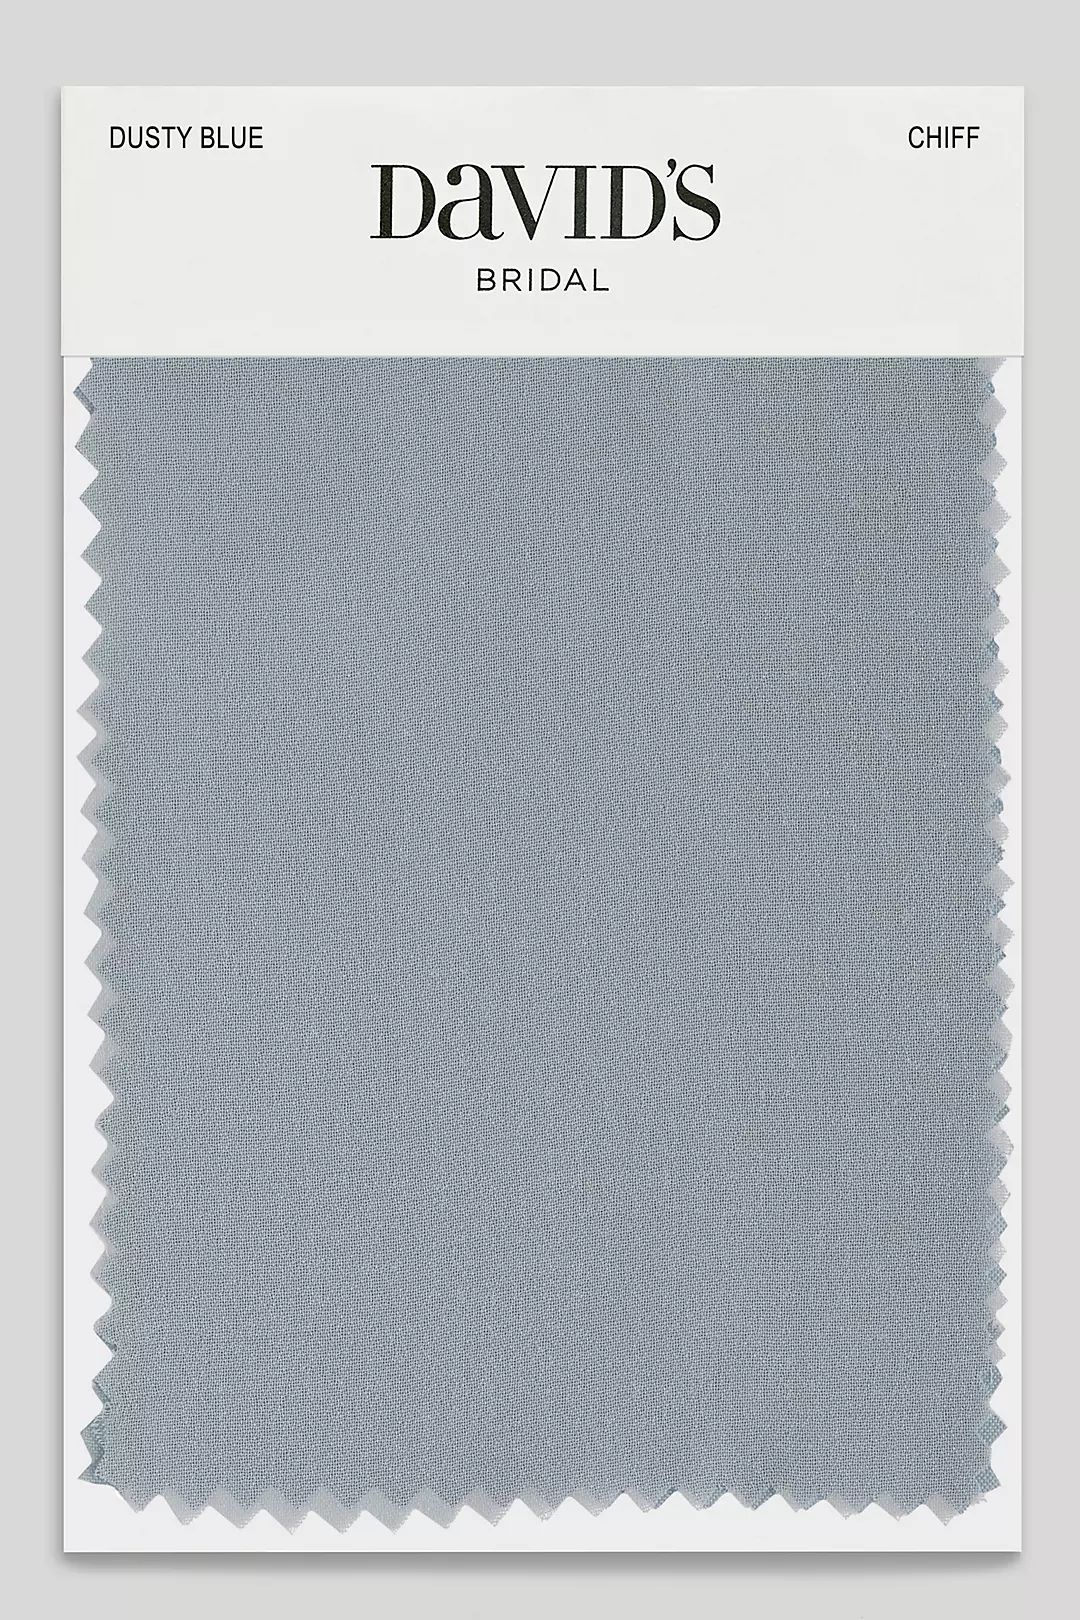 Dusty Blue Fabric Swatch Image